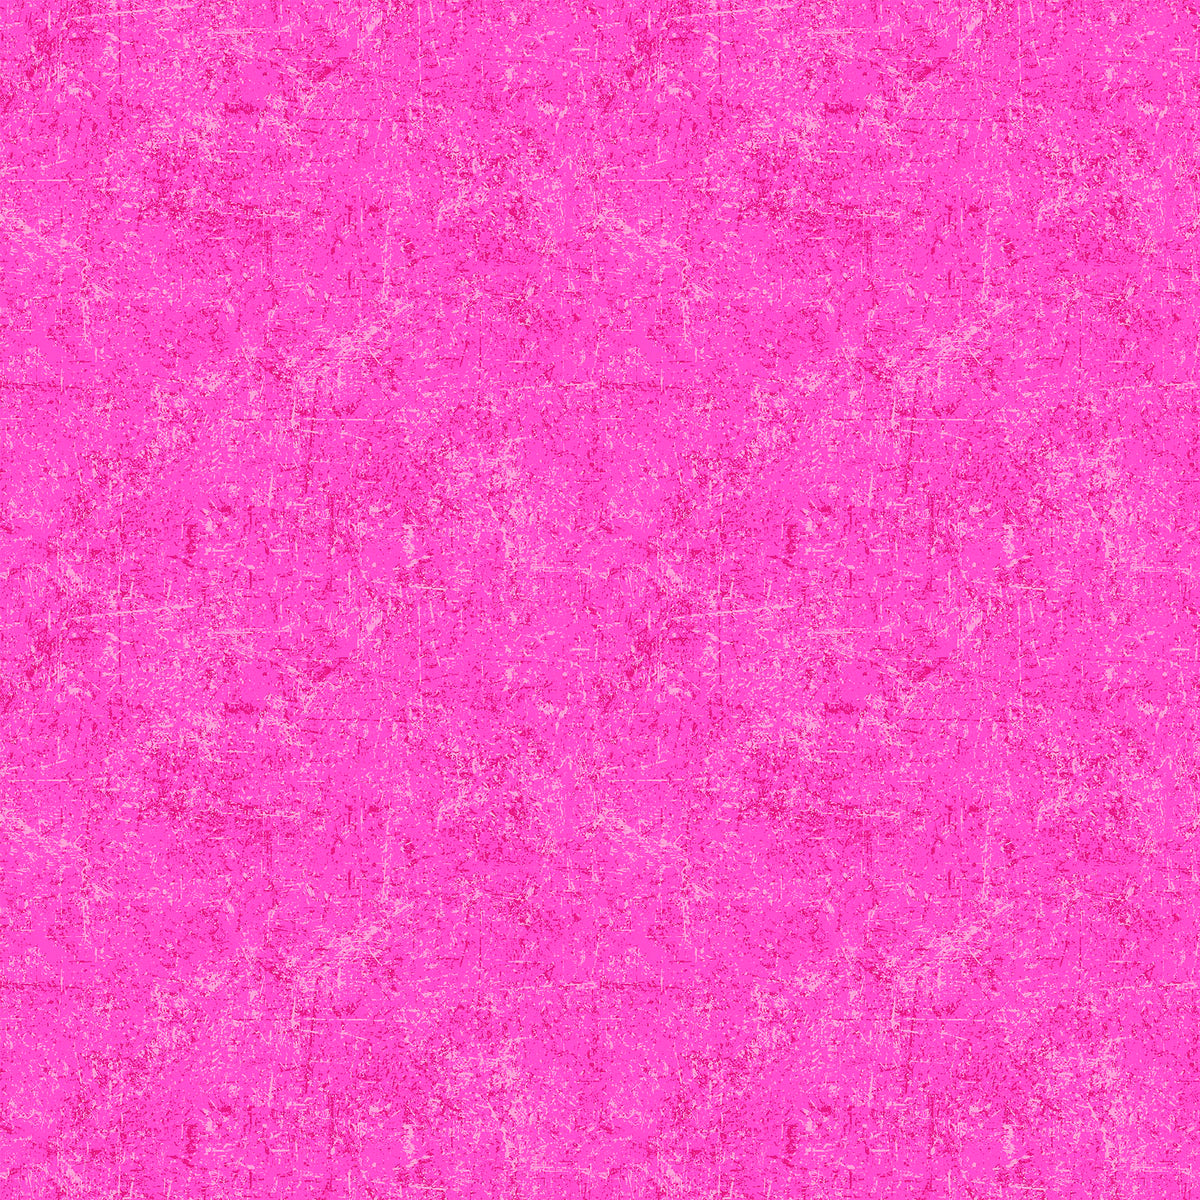 Glisten Quilt Fabric - Blender in Peony Pink - P10091-23